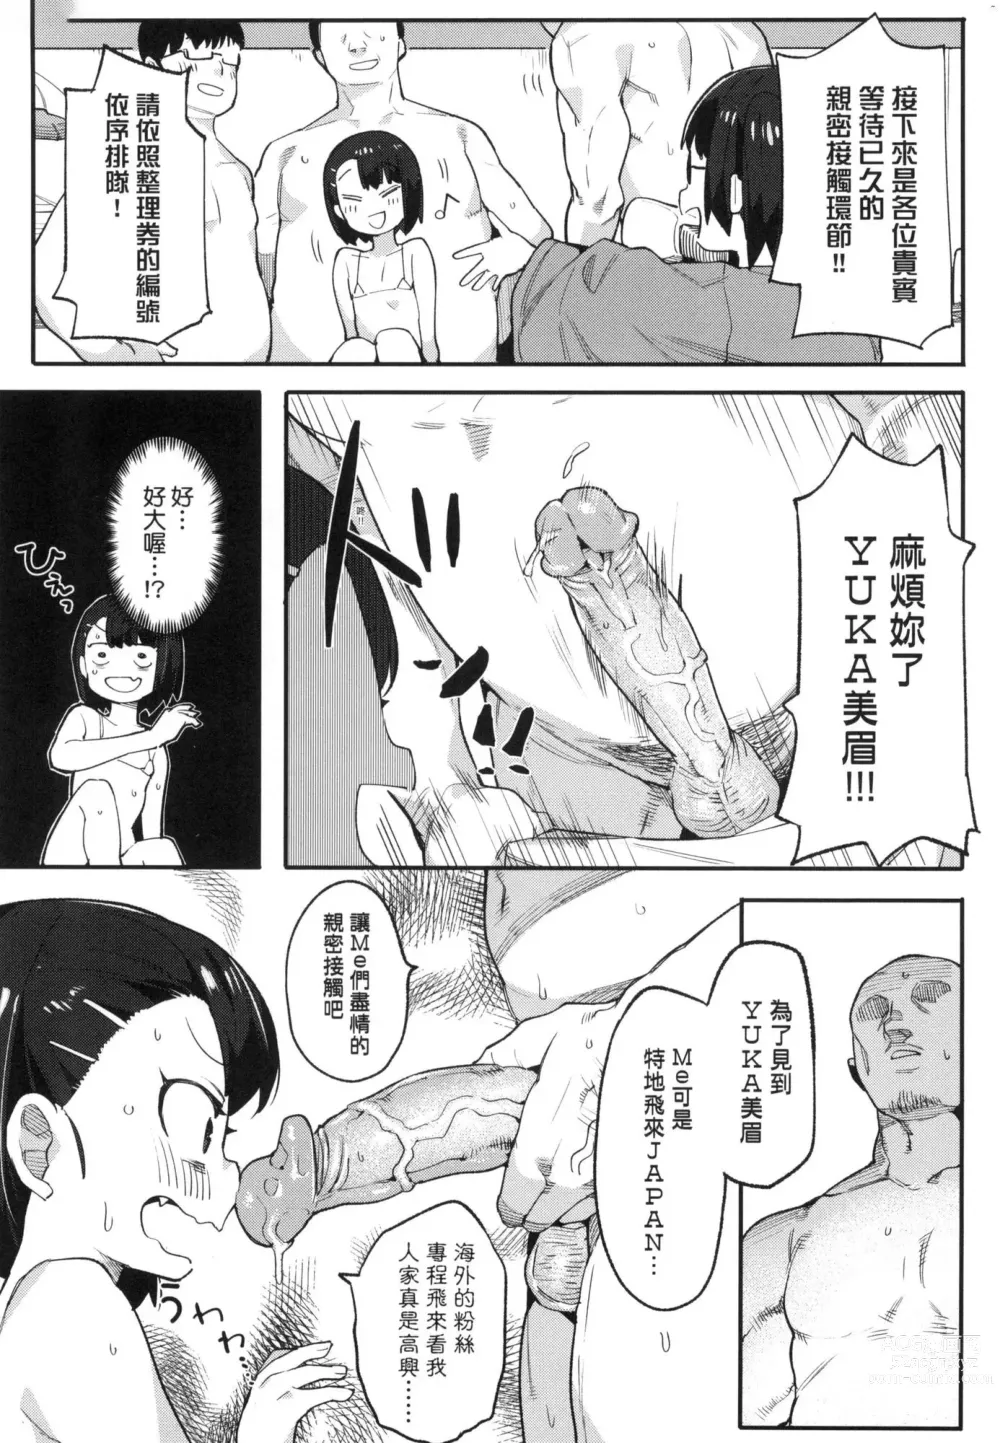 Page 156 of manga 情愛指導調教 (decensored)